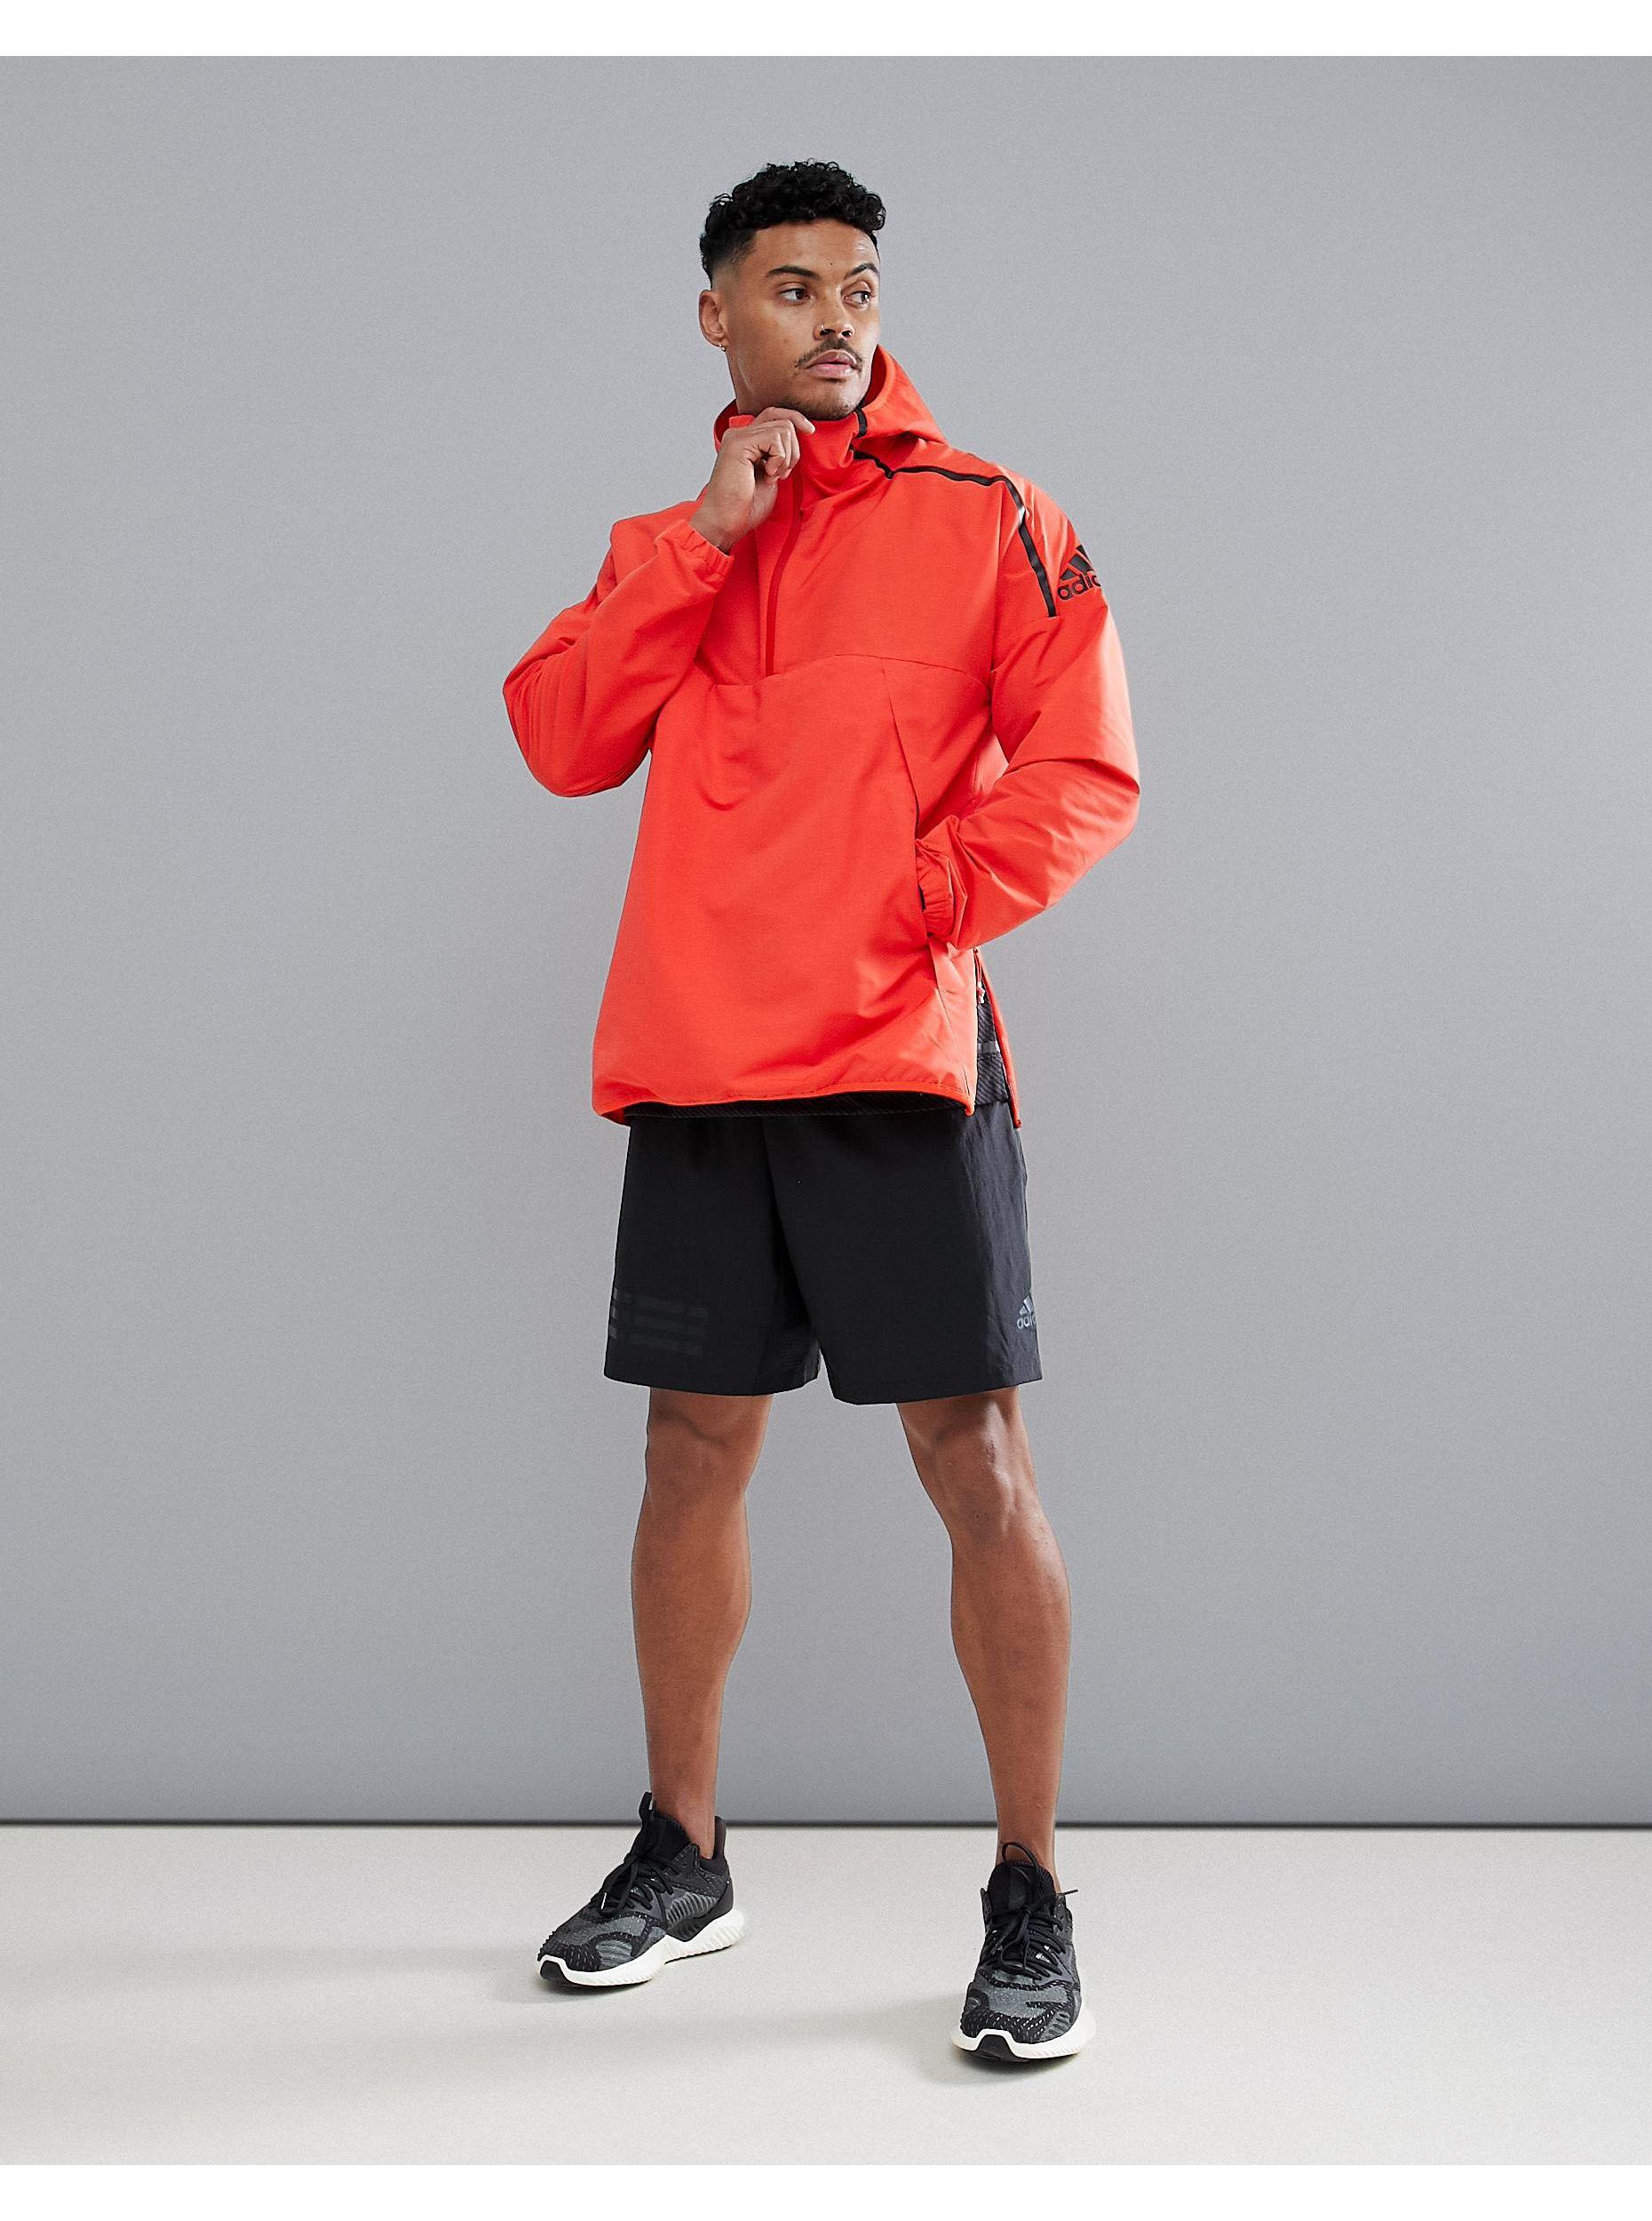 adidas Originals Fleece Adidas Zne Hooded Anorak in Red for Men - Lyst